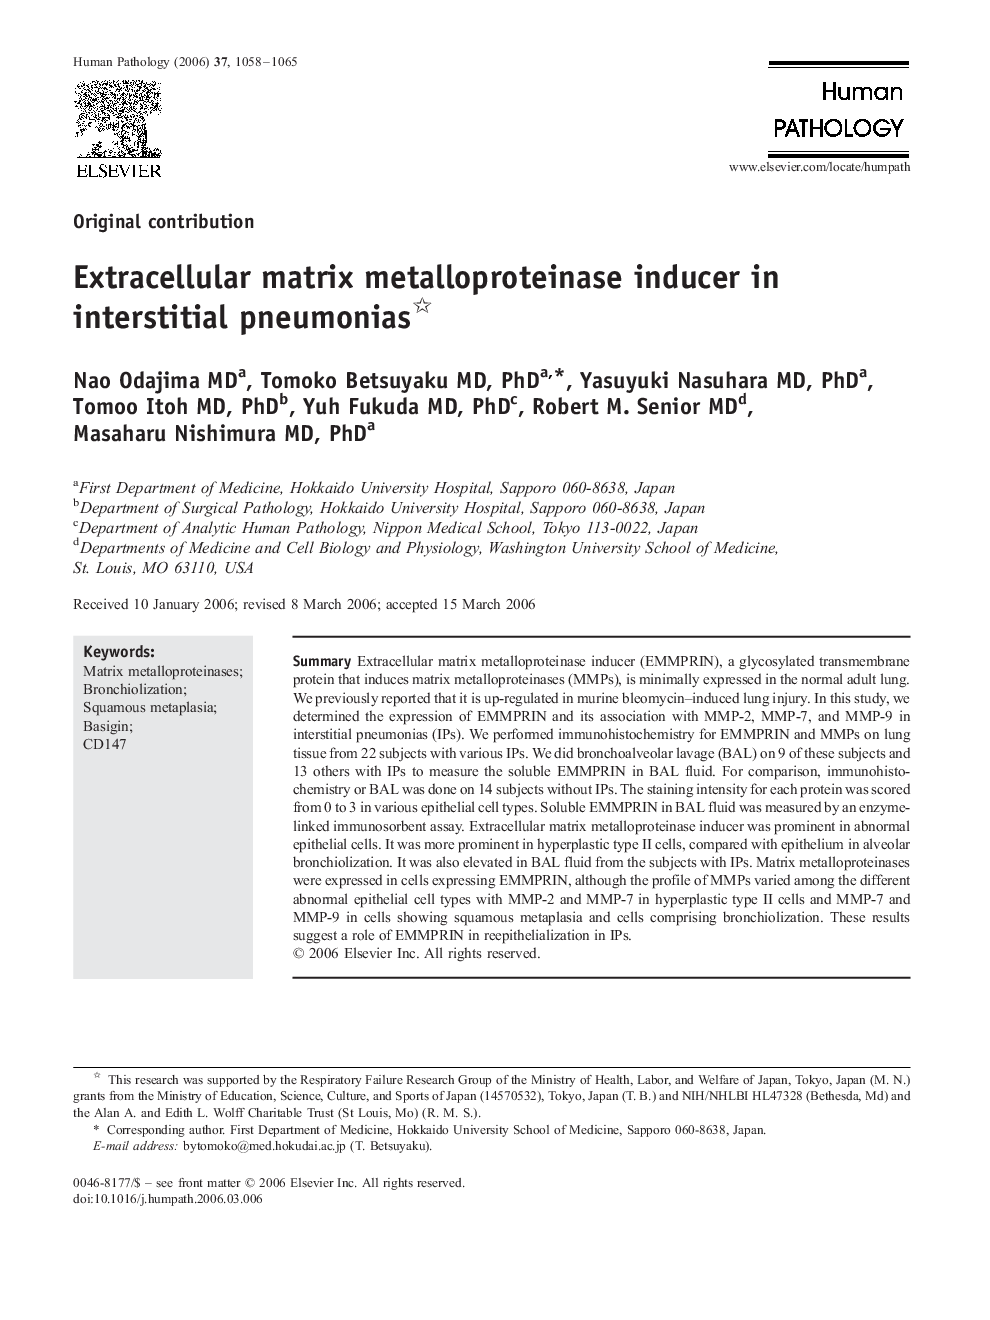 Extracellular matrix metalloproteinase inducer in interstitial pneumonias 